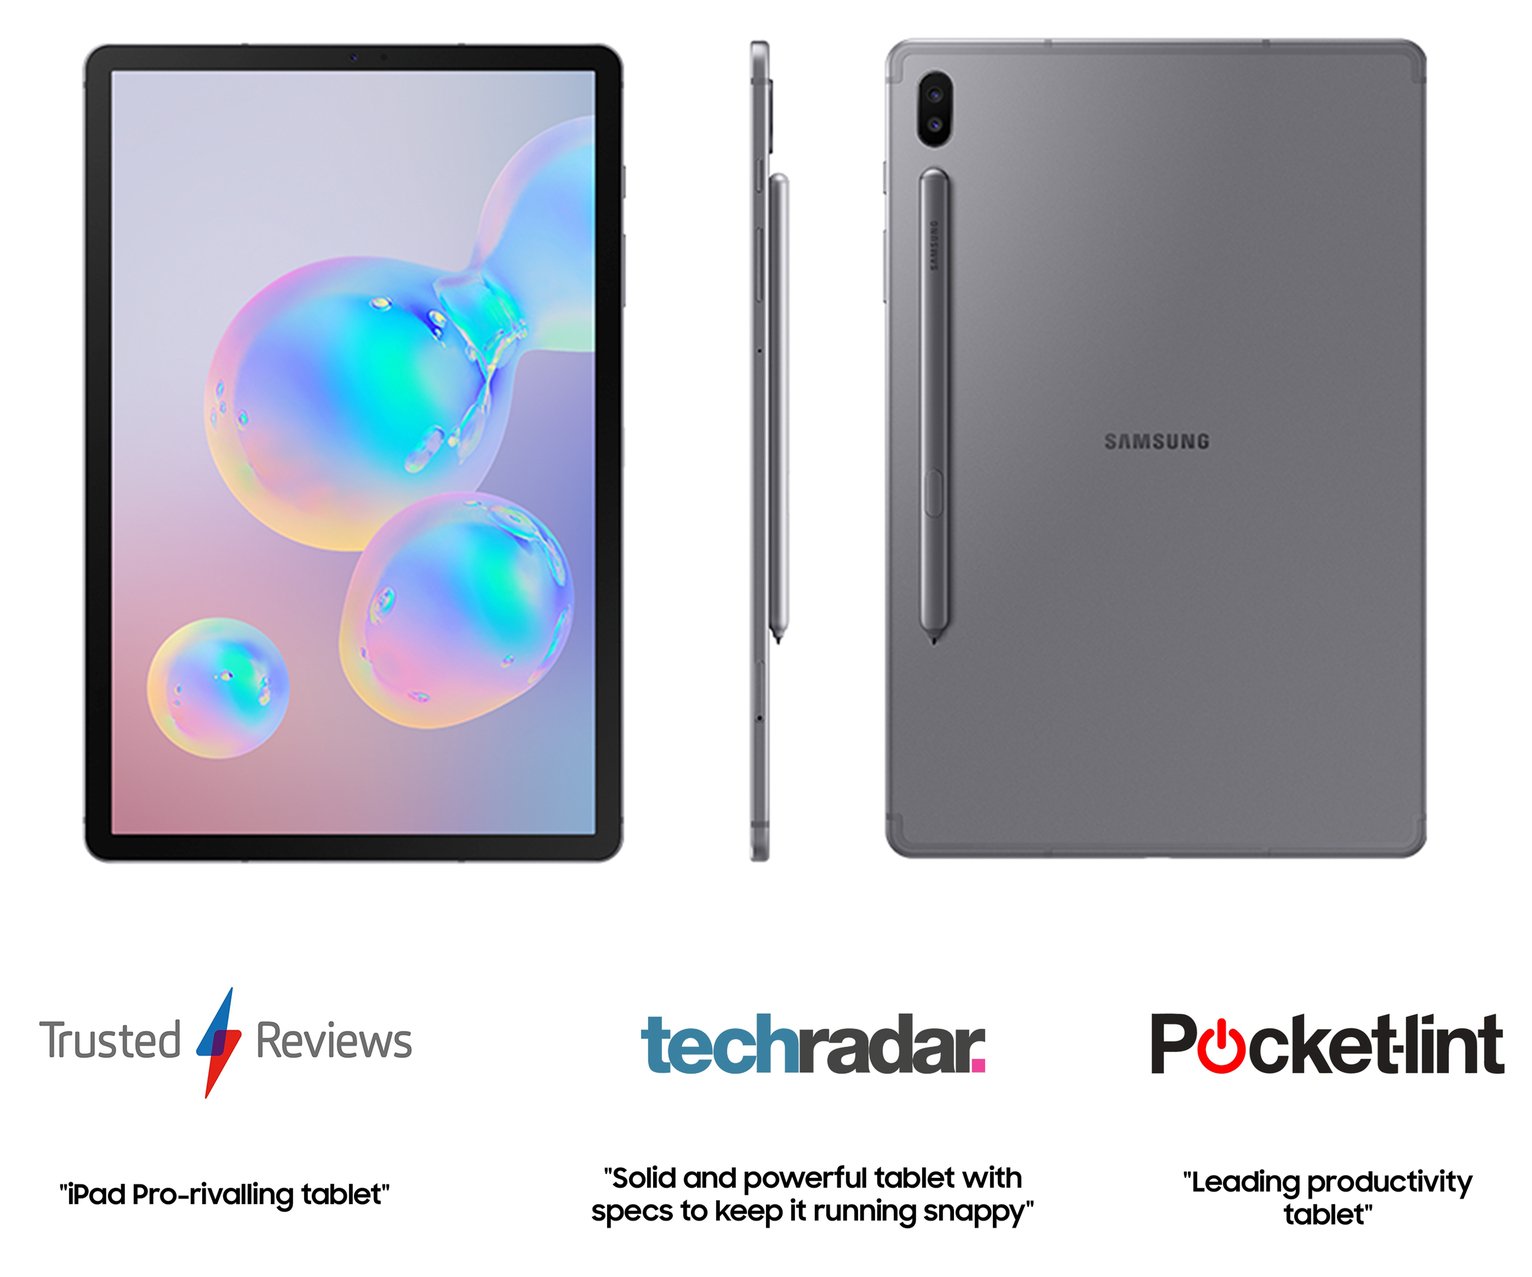 Samsung Galaxy Tab S6 10.5 Inch 128GB Cellular Tablet Review